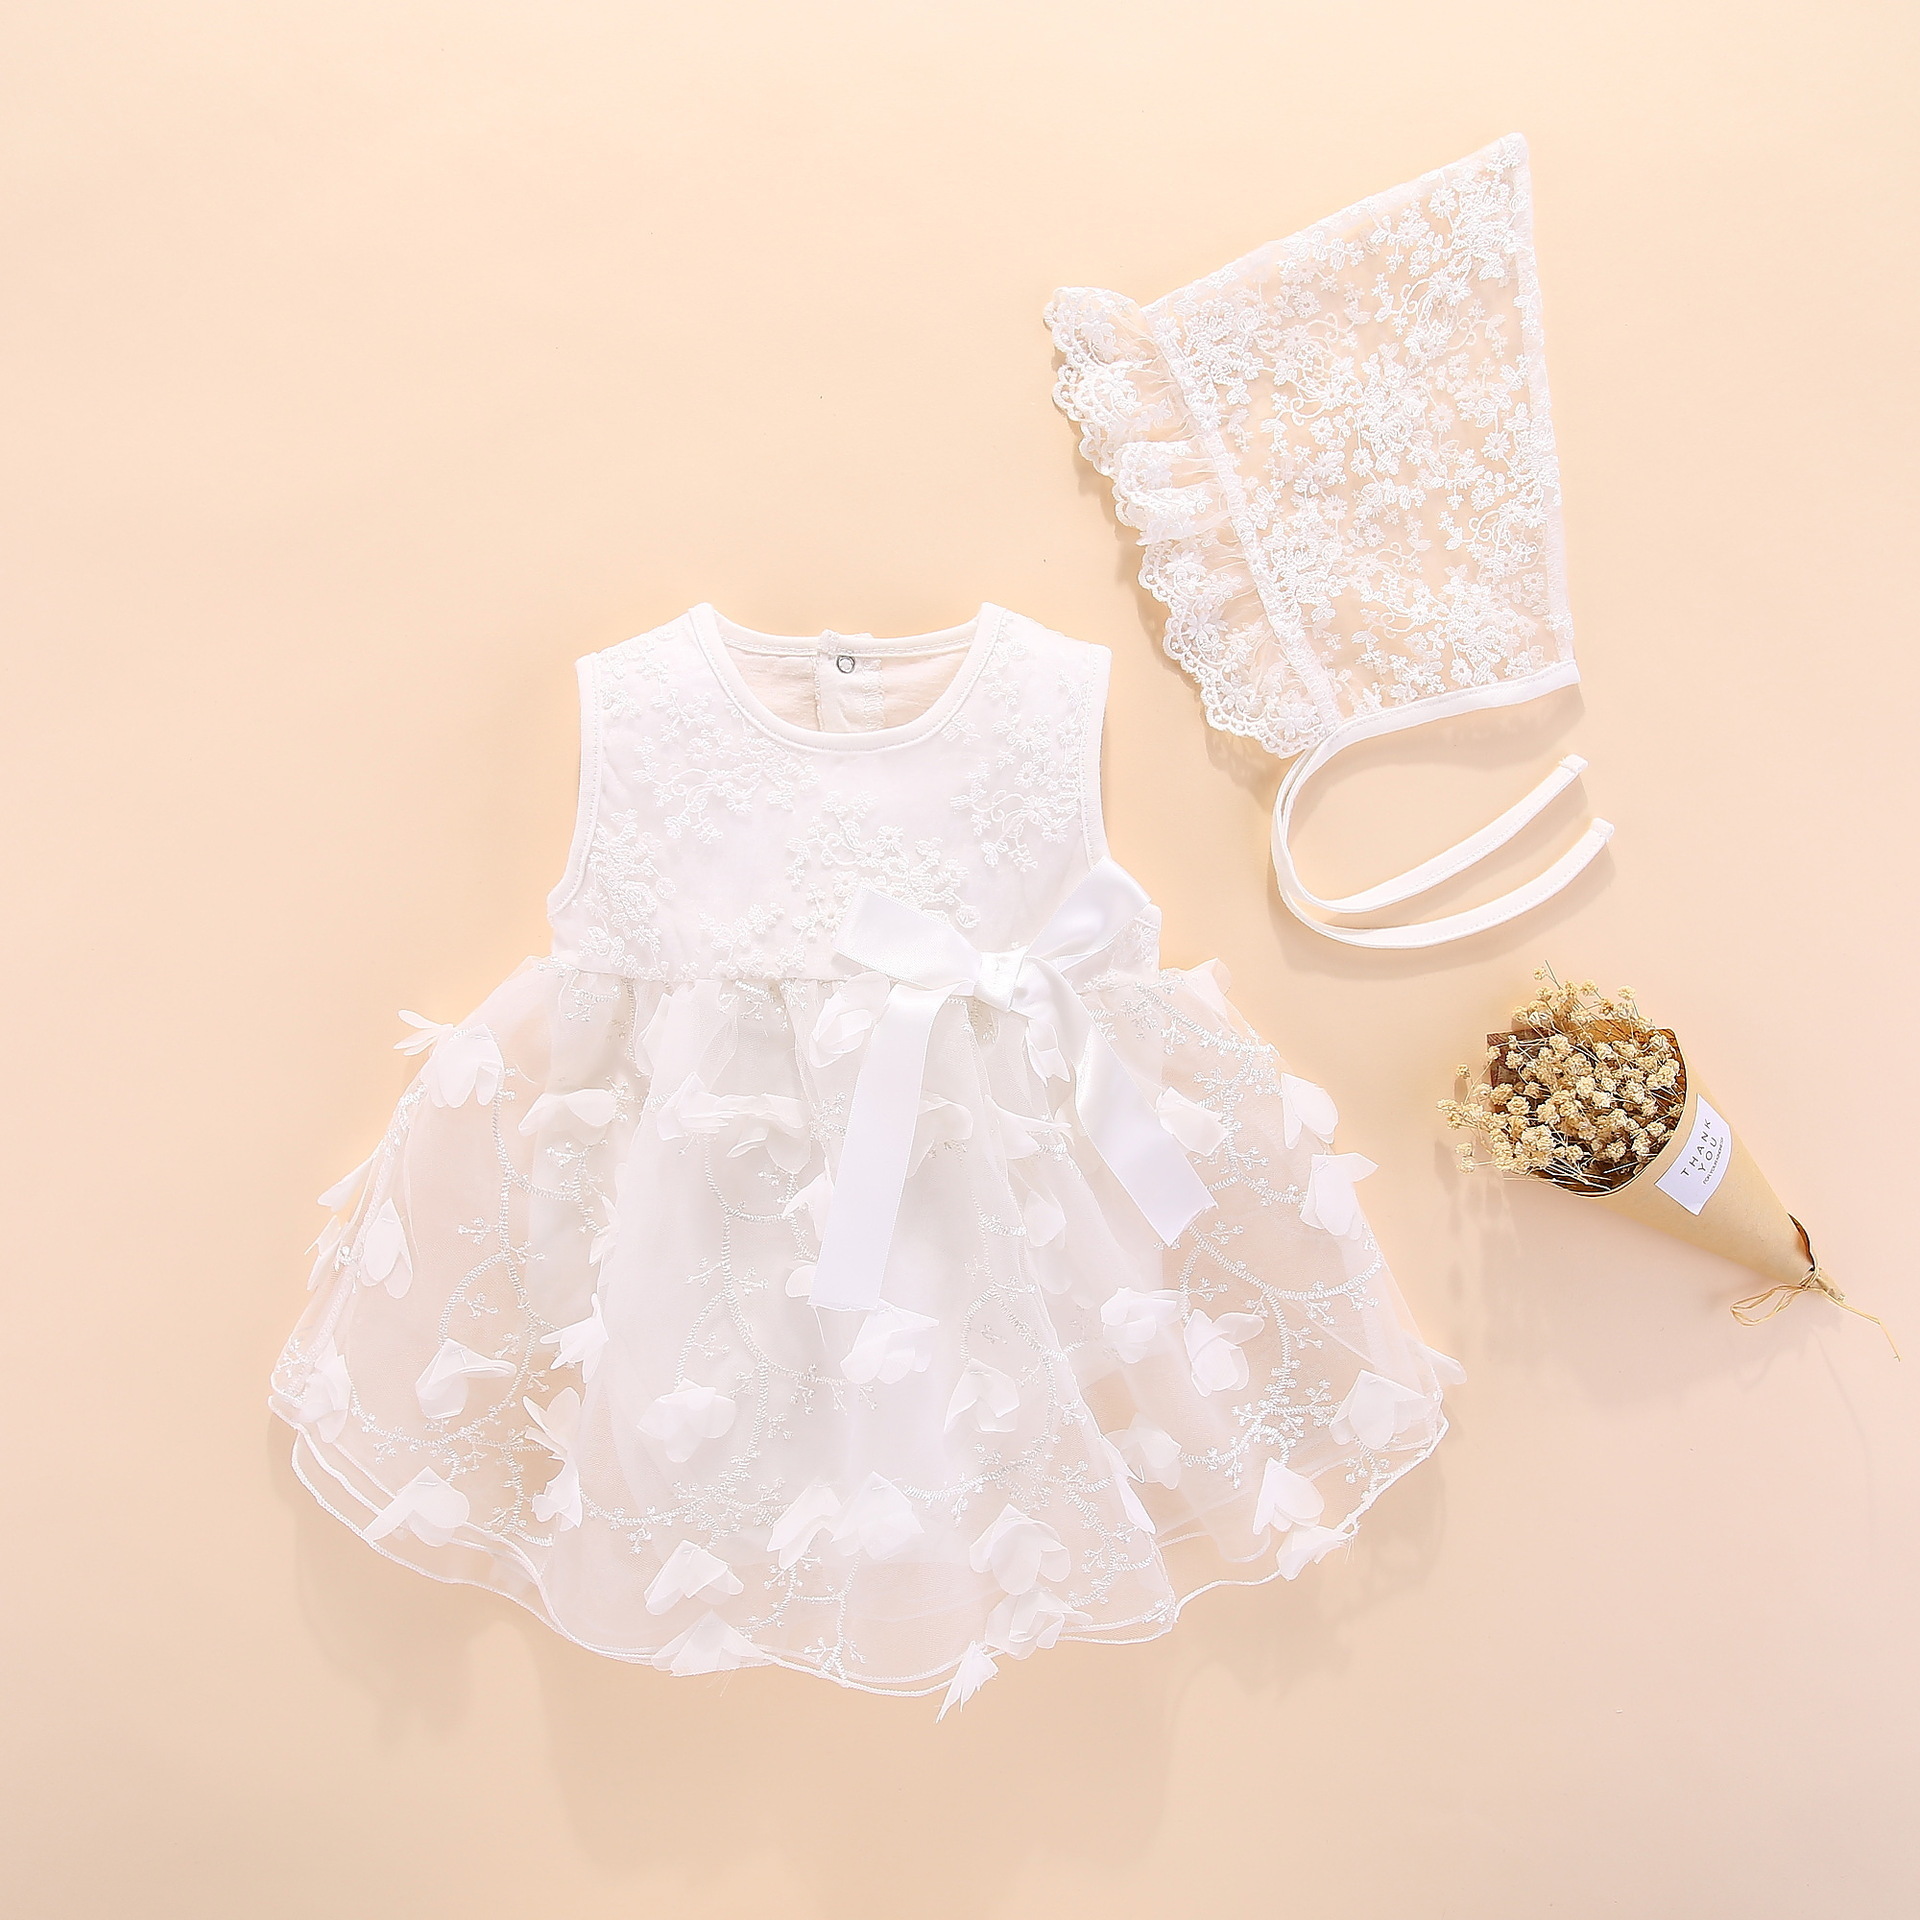 Babys Fille robe espagnole style Floral Nœud Rose Newborn 0-3 M 3-6 mois 